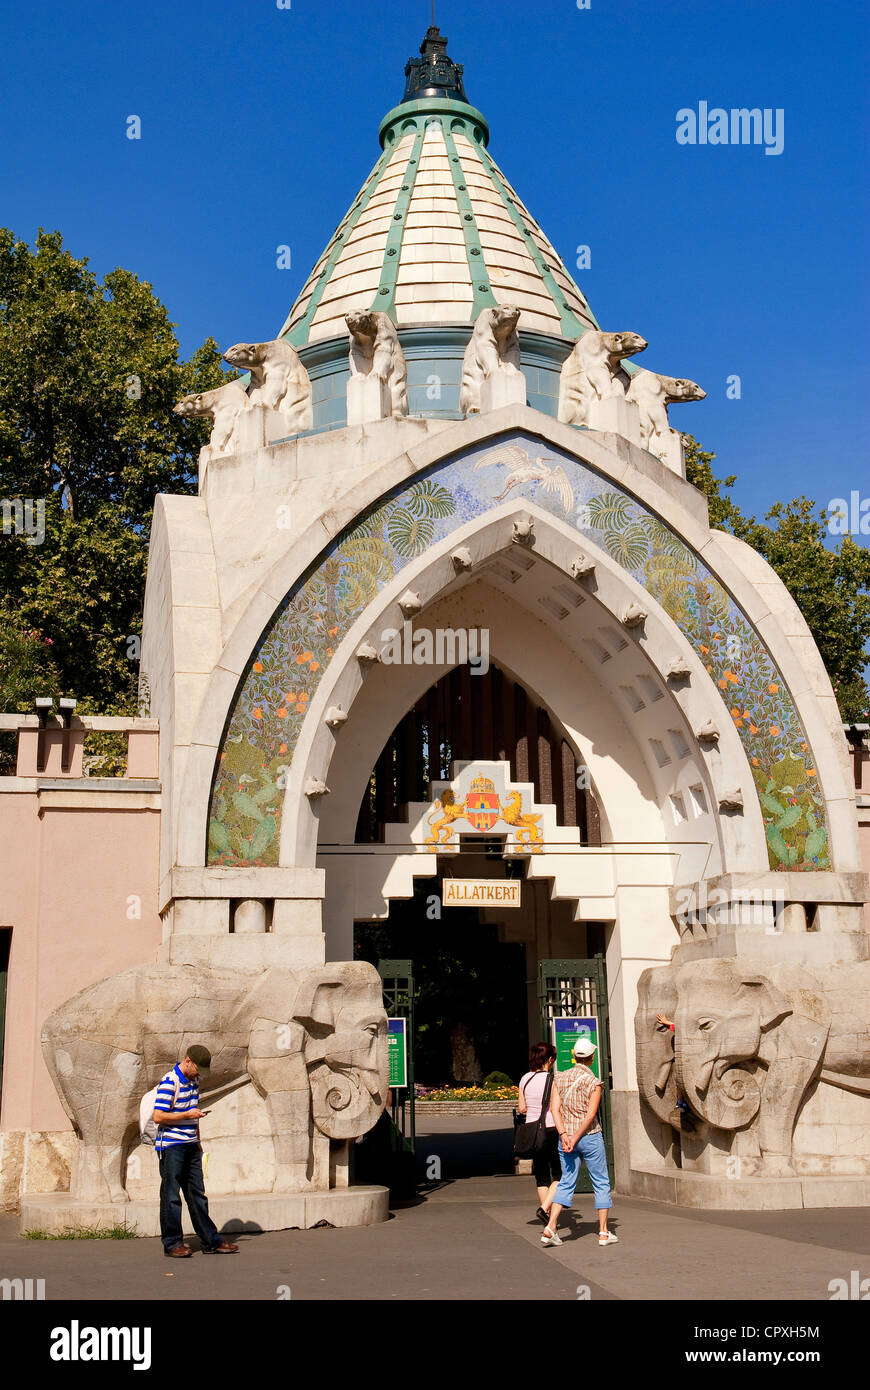 Hungary, Budapest, entrance of the zoo along the Allatkerti utca in the Varosliget Park Stock Photo